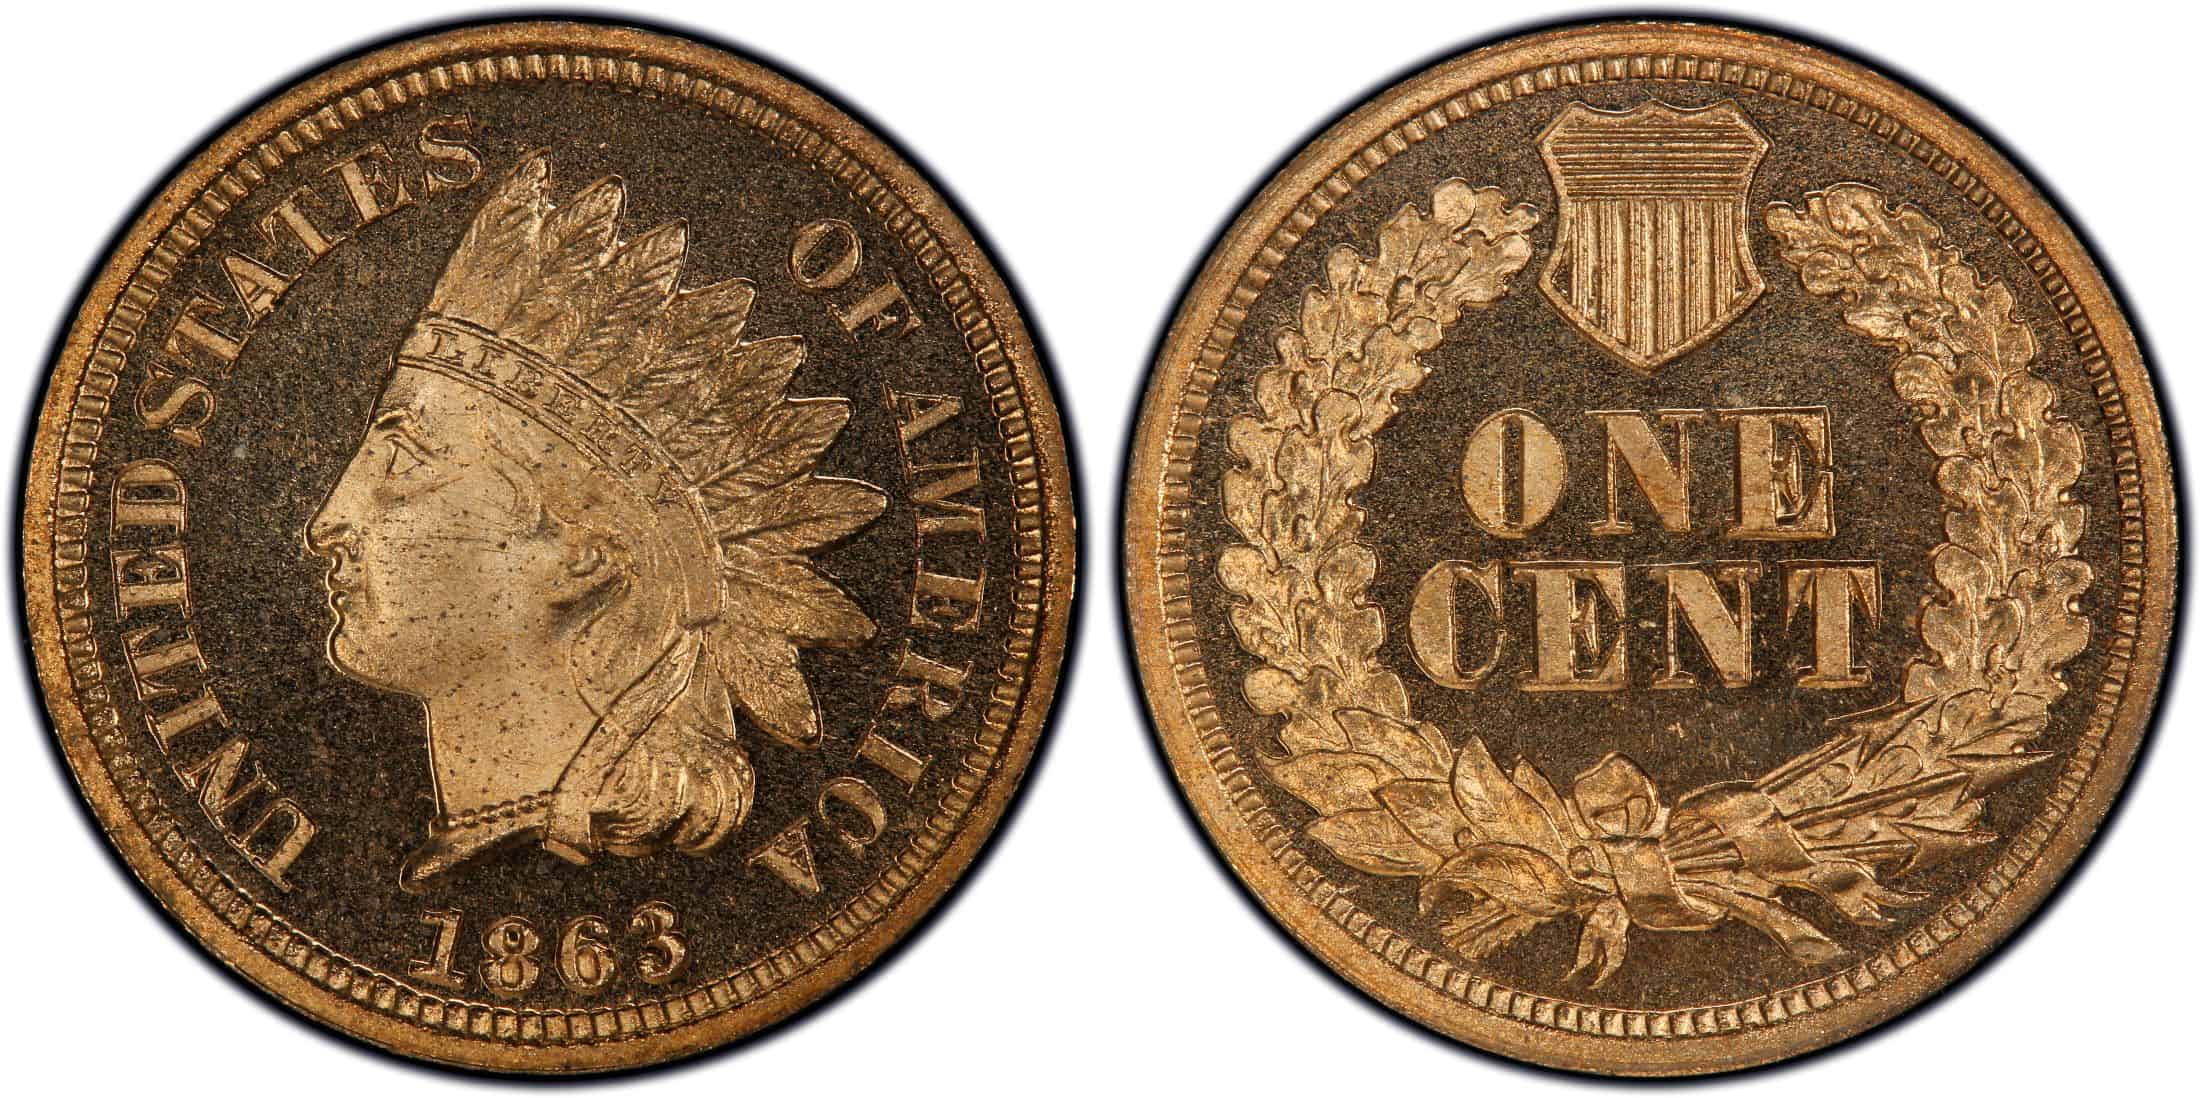 1863 No Mint Mark Proof Indian Head Penny Value (CAM/DCAM)